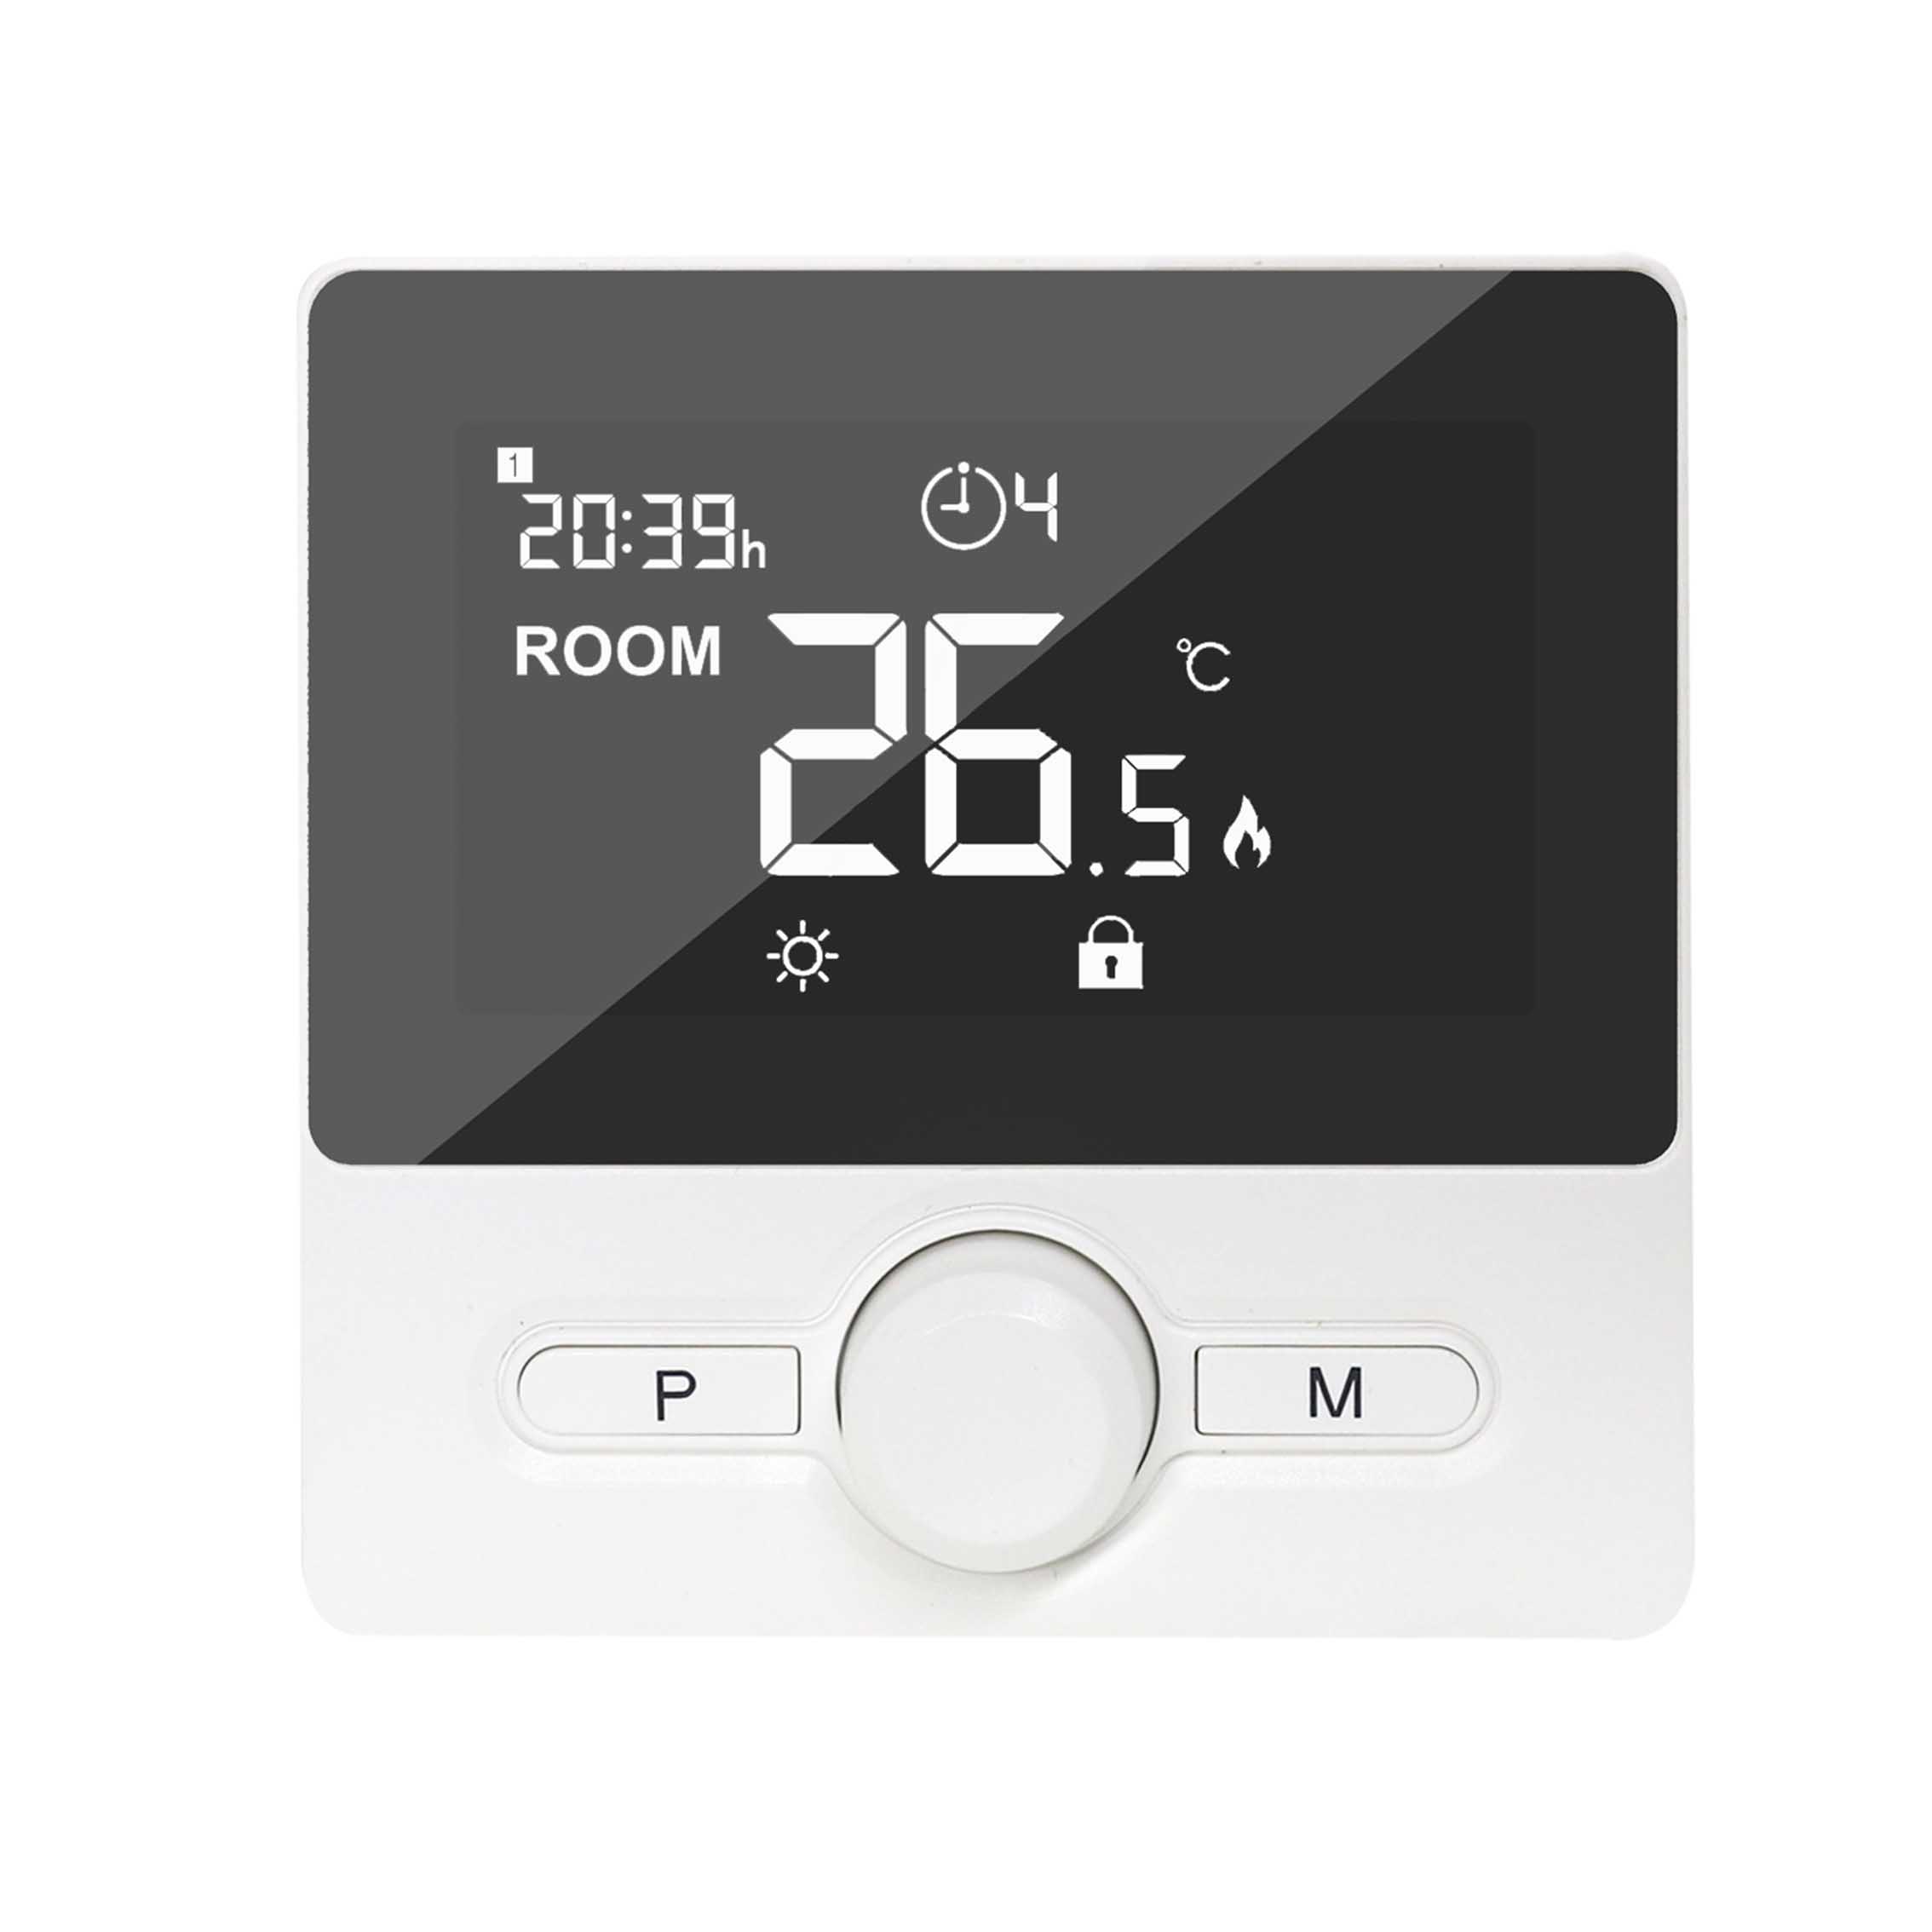 Revolutionize Your Water Heat Pump Control with Smart RF Wireless Modbus Thermostat